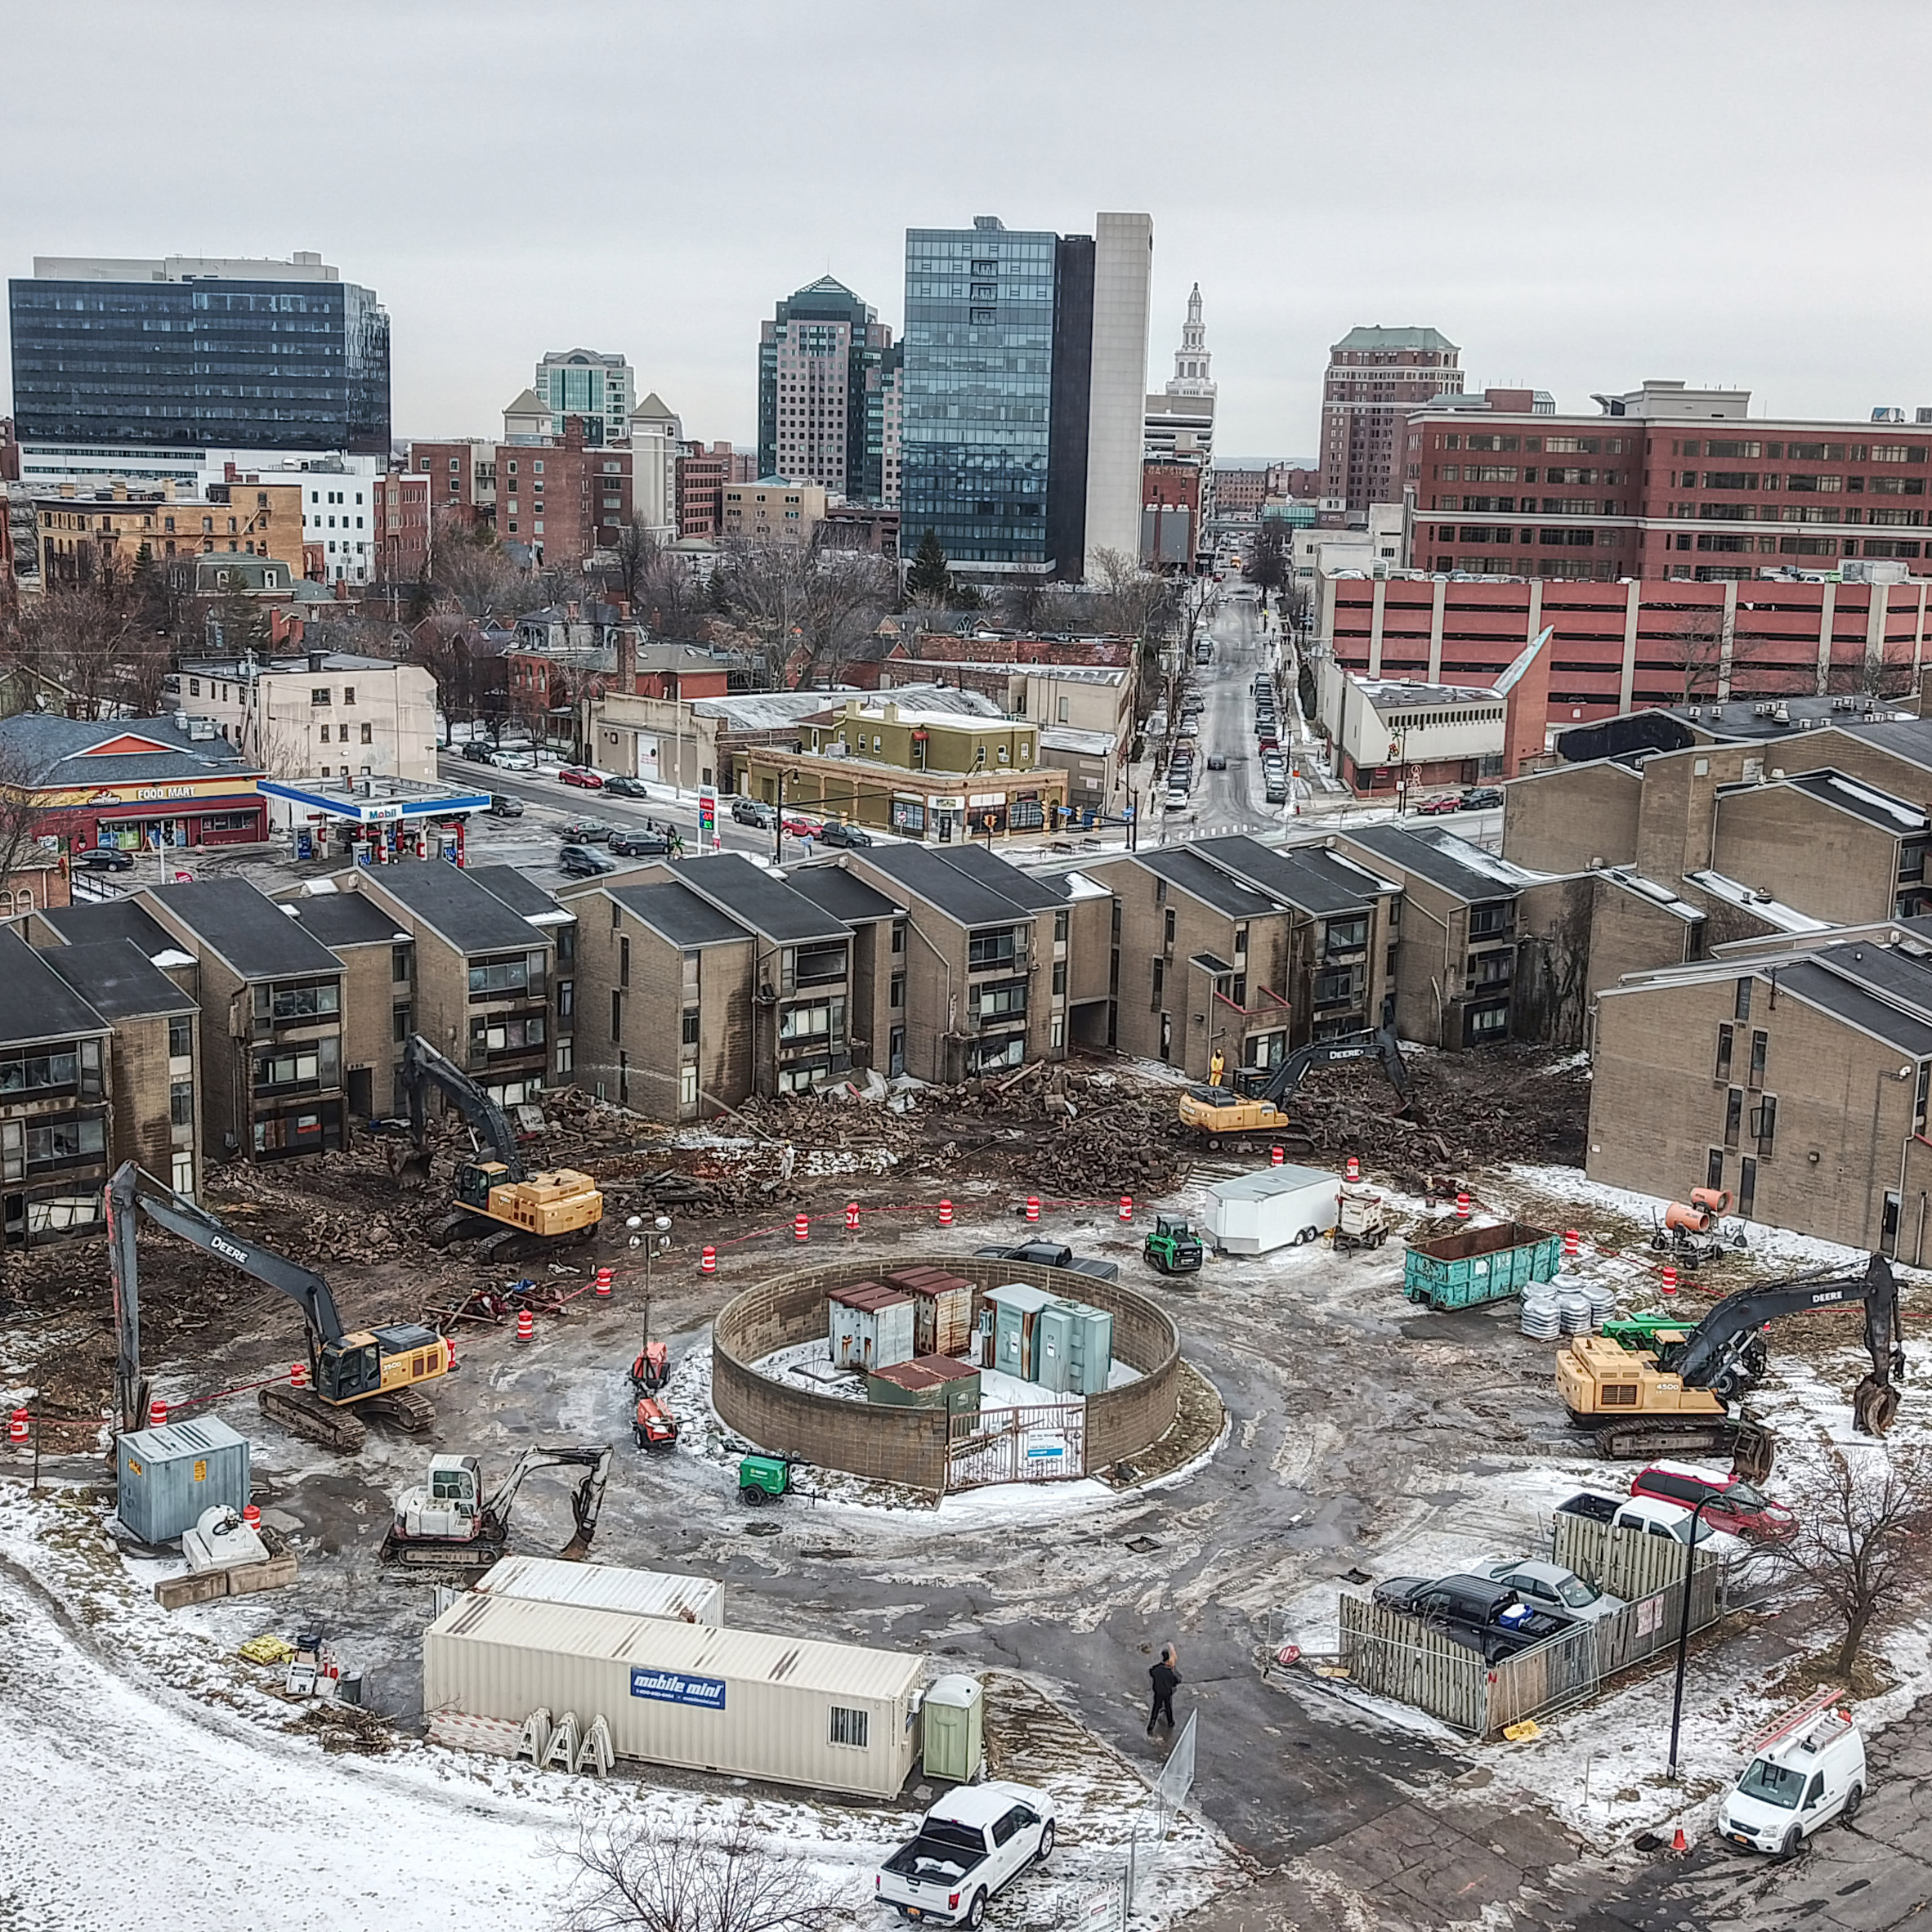 Demolition restarts on Paul Rudolph's apartments in Buffalo